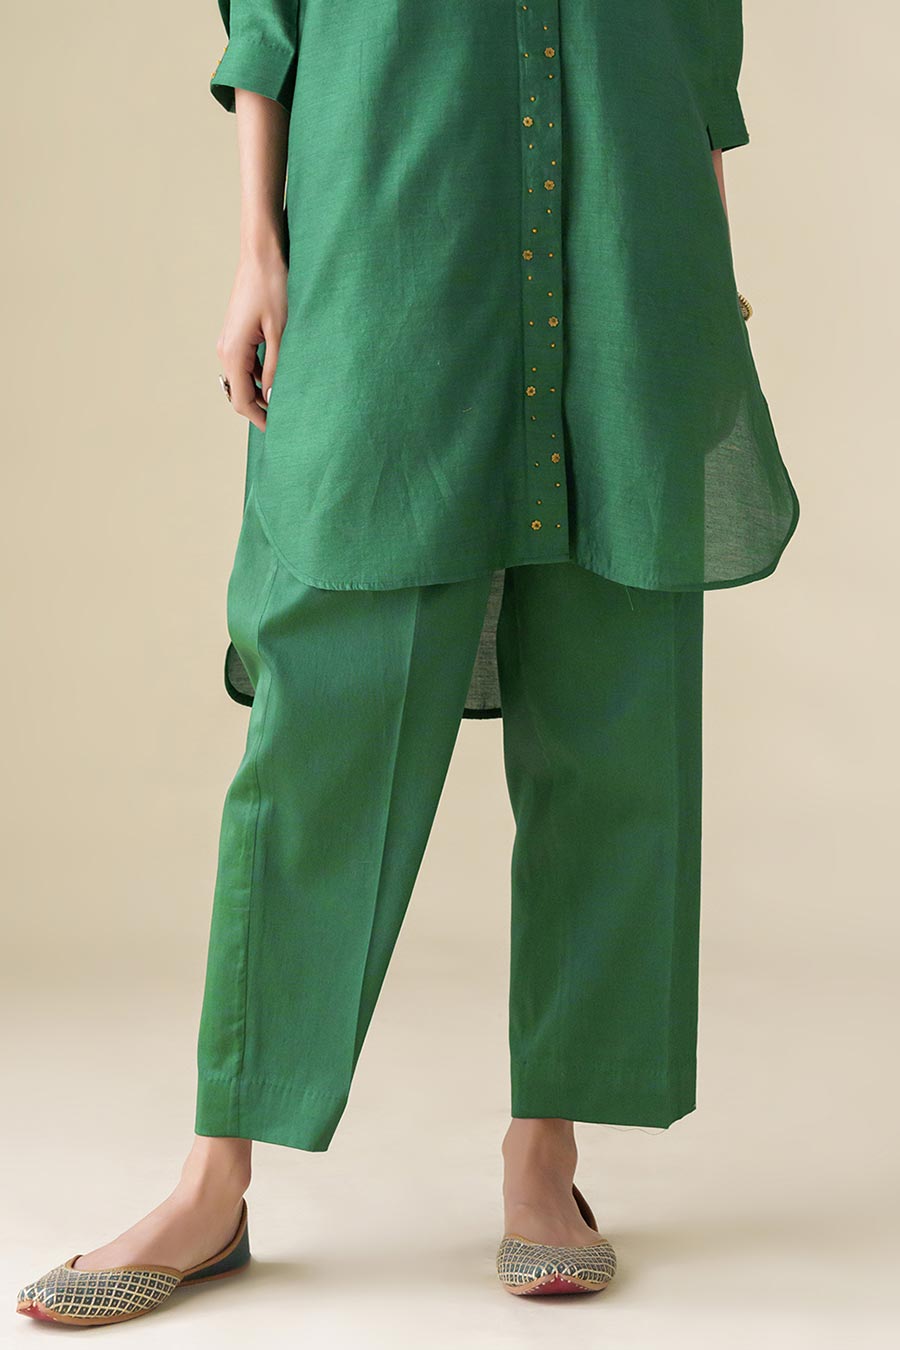 Bottle Green Embellished Tunic & Pants (Set of 2)